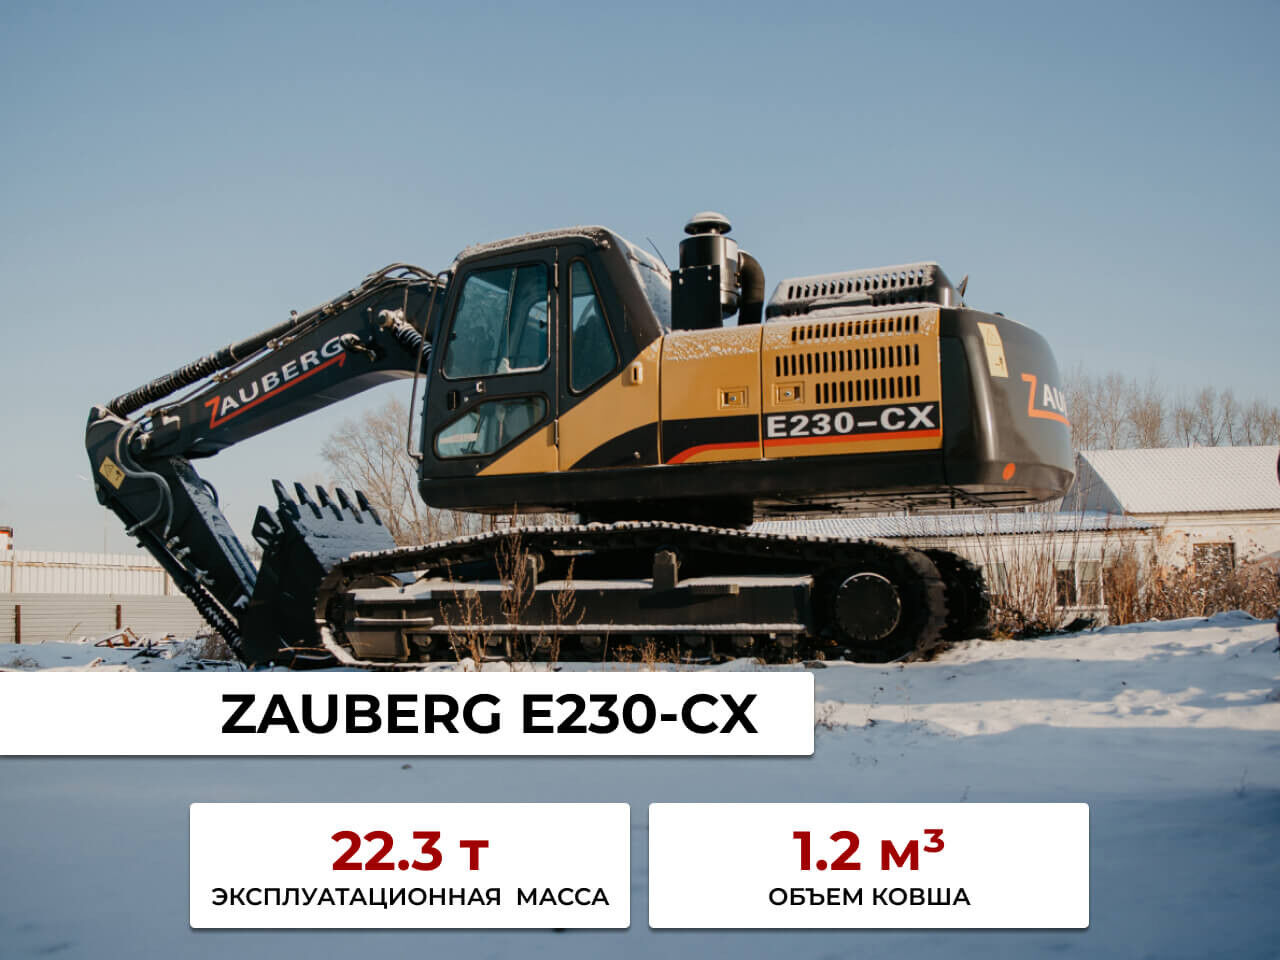 Гусеничный экскаватор Zauberg E230-CX SF